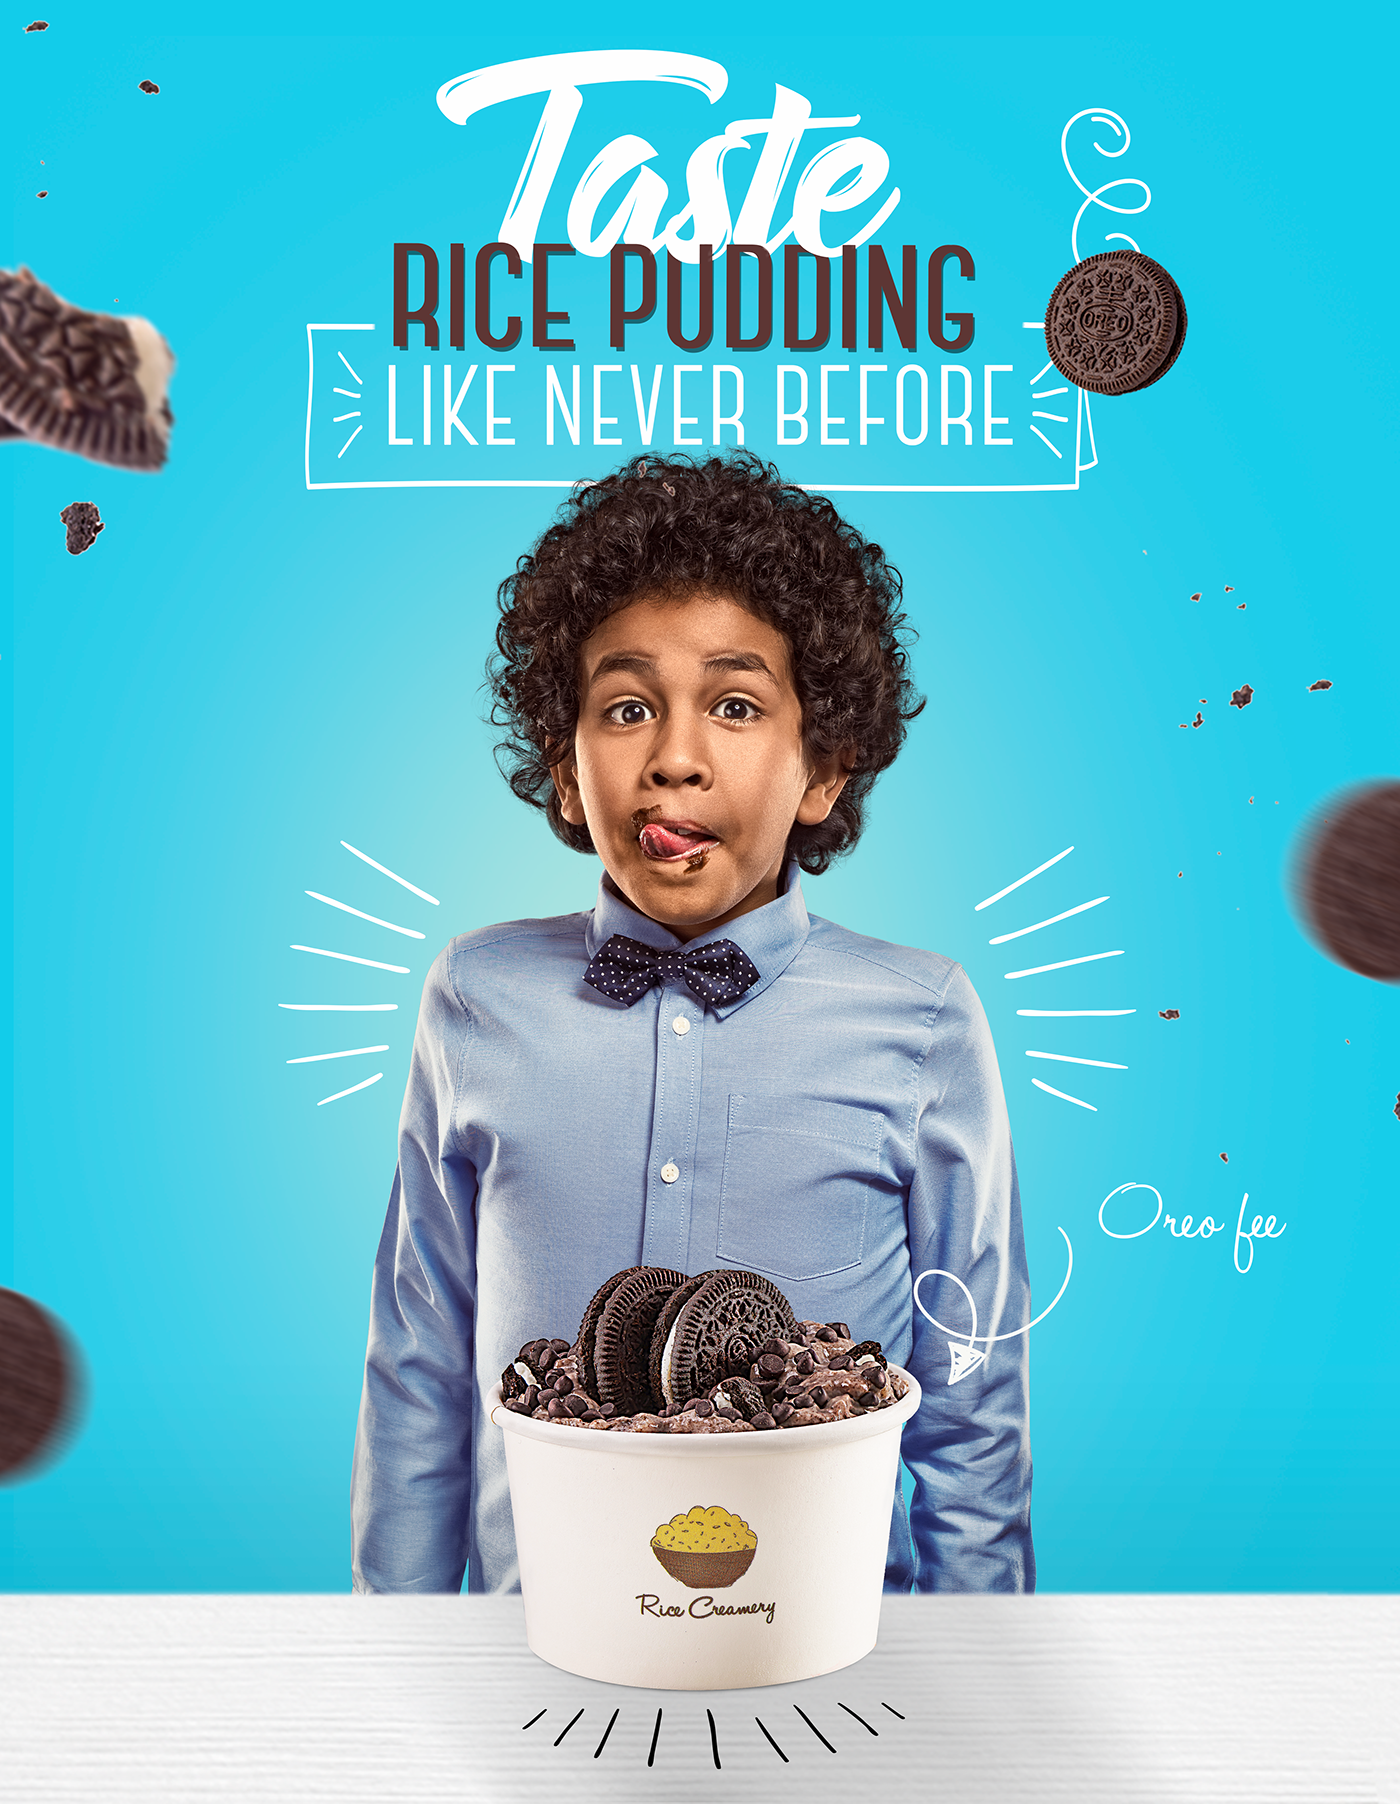 Food  Pudding happy tasty oreo colors kid chocolate nuttela ricepudding